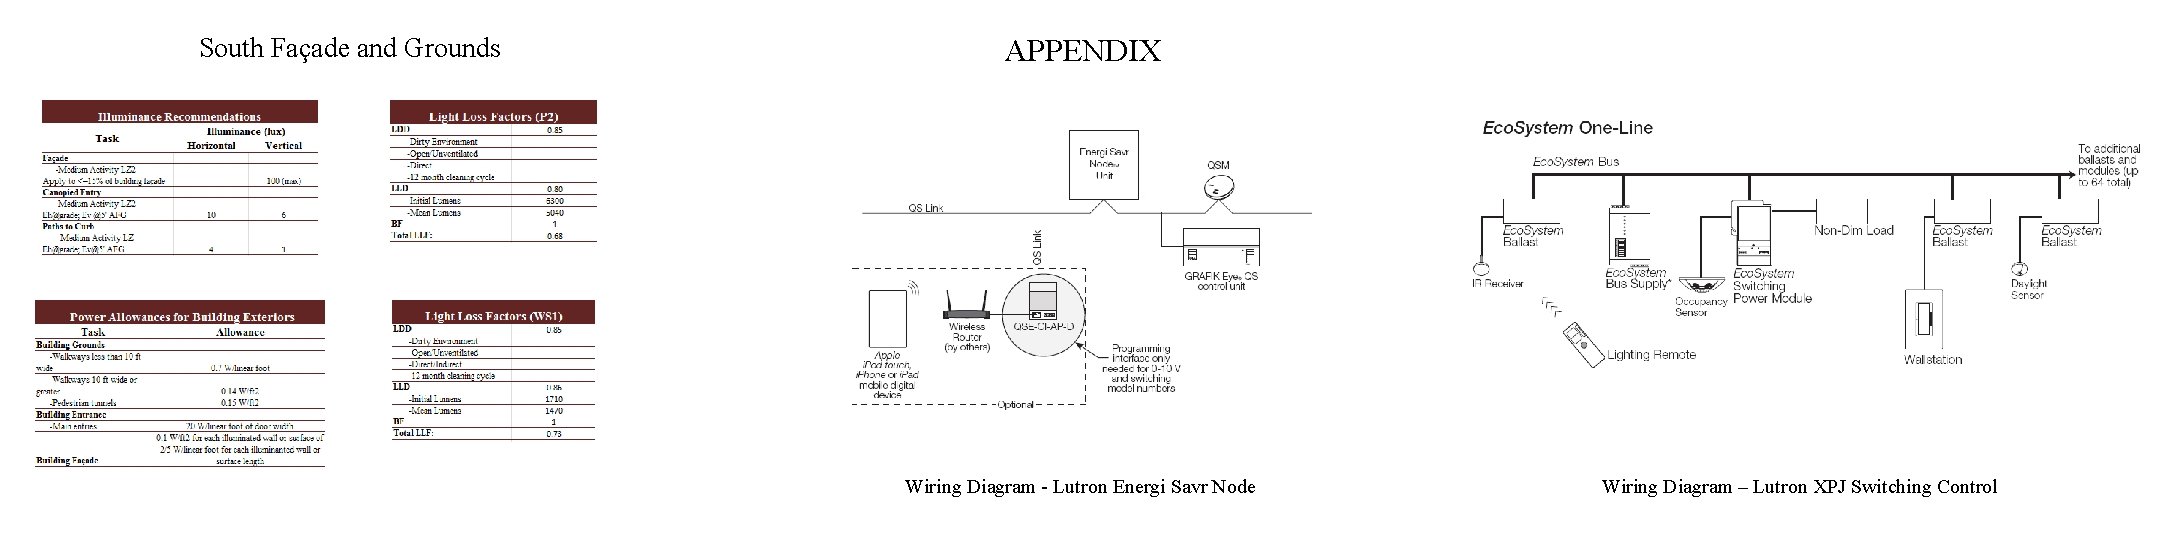 South Façade and Grounds APPENDIX Wiring Diagram - Lutron Energi Savr Node Wiring Diagram